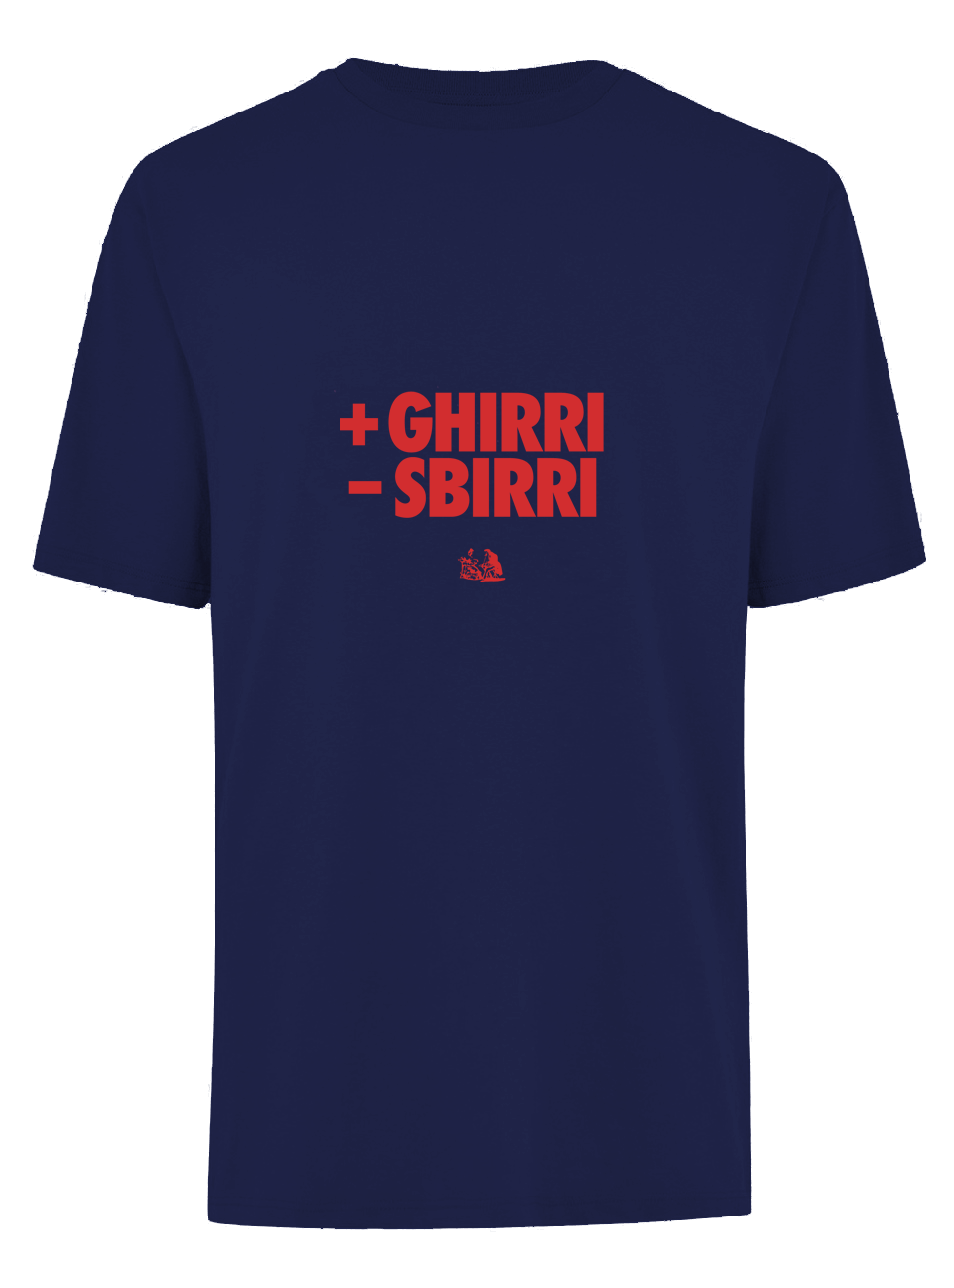 T-Shirt Blu + Ghirri-Sbirri SOLD OUT